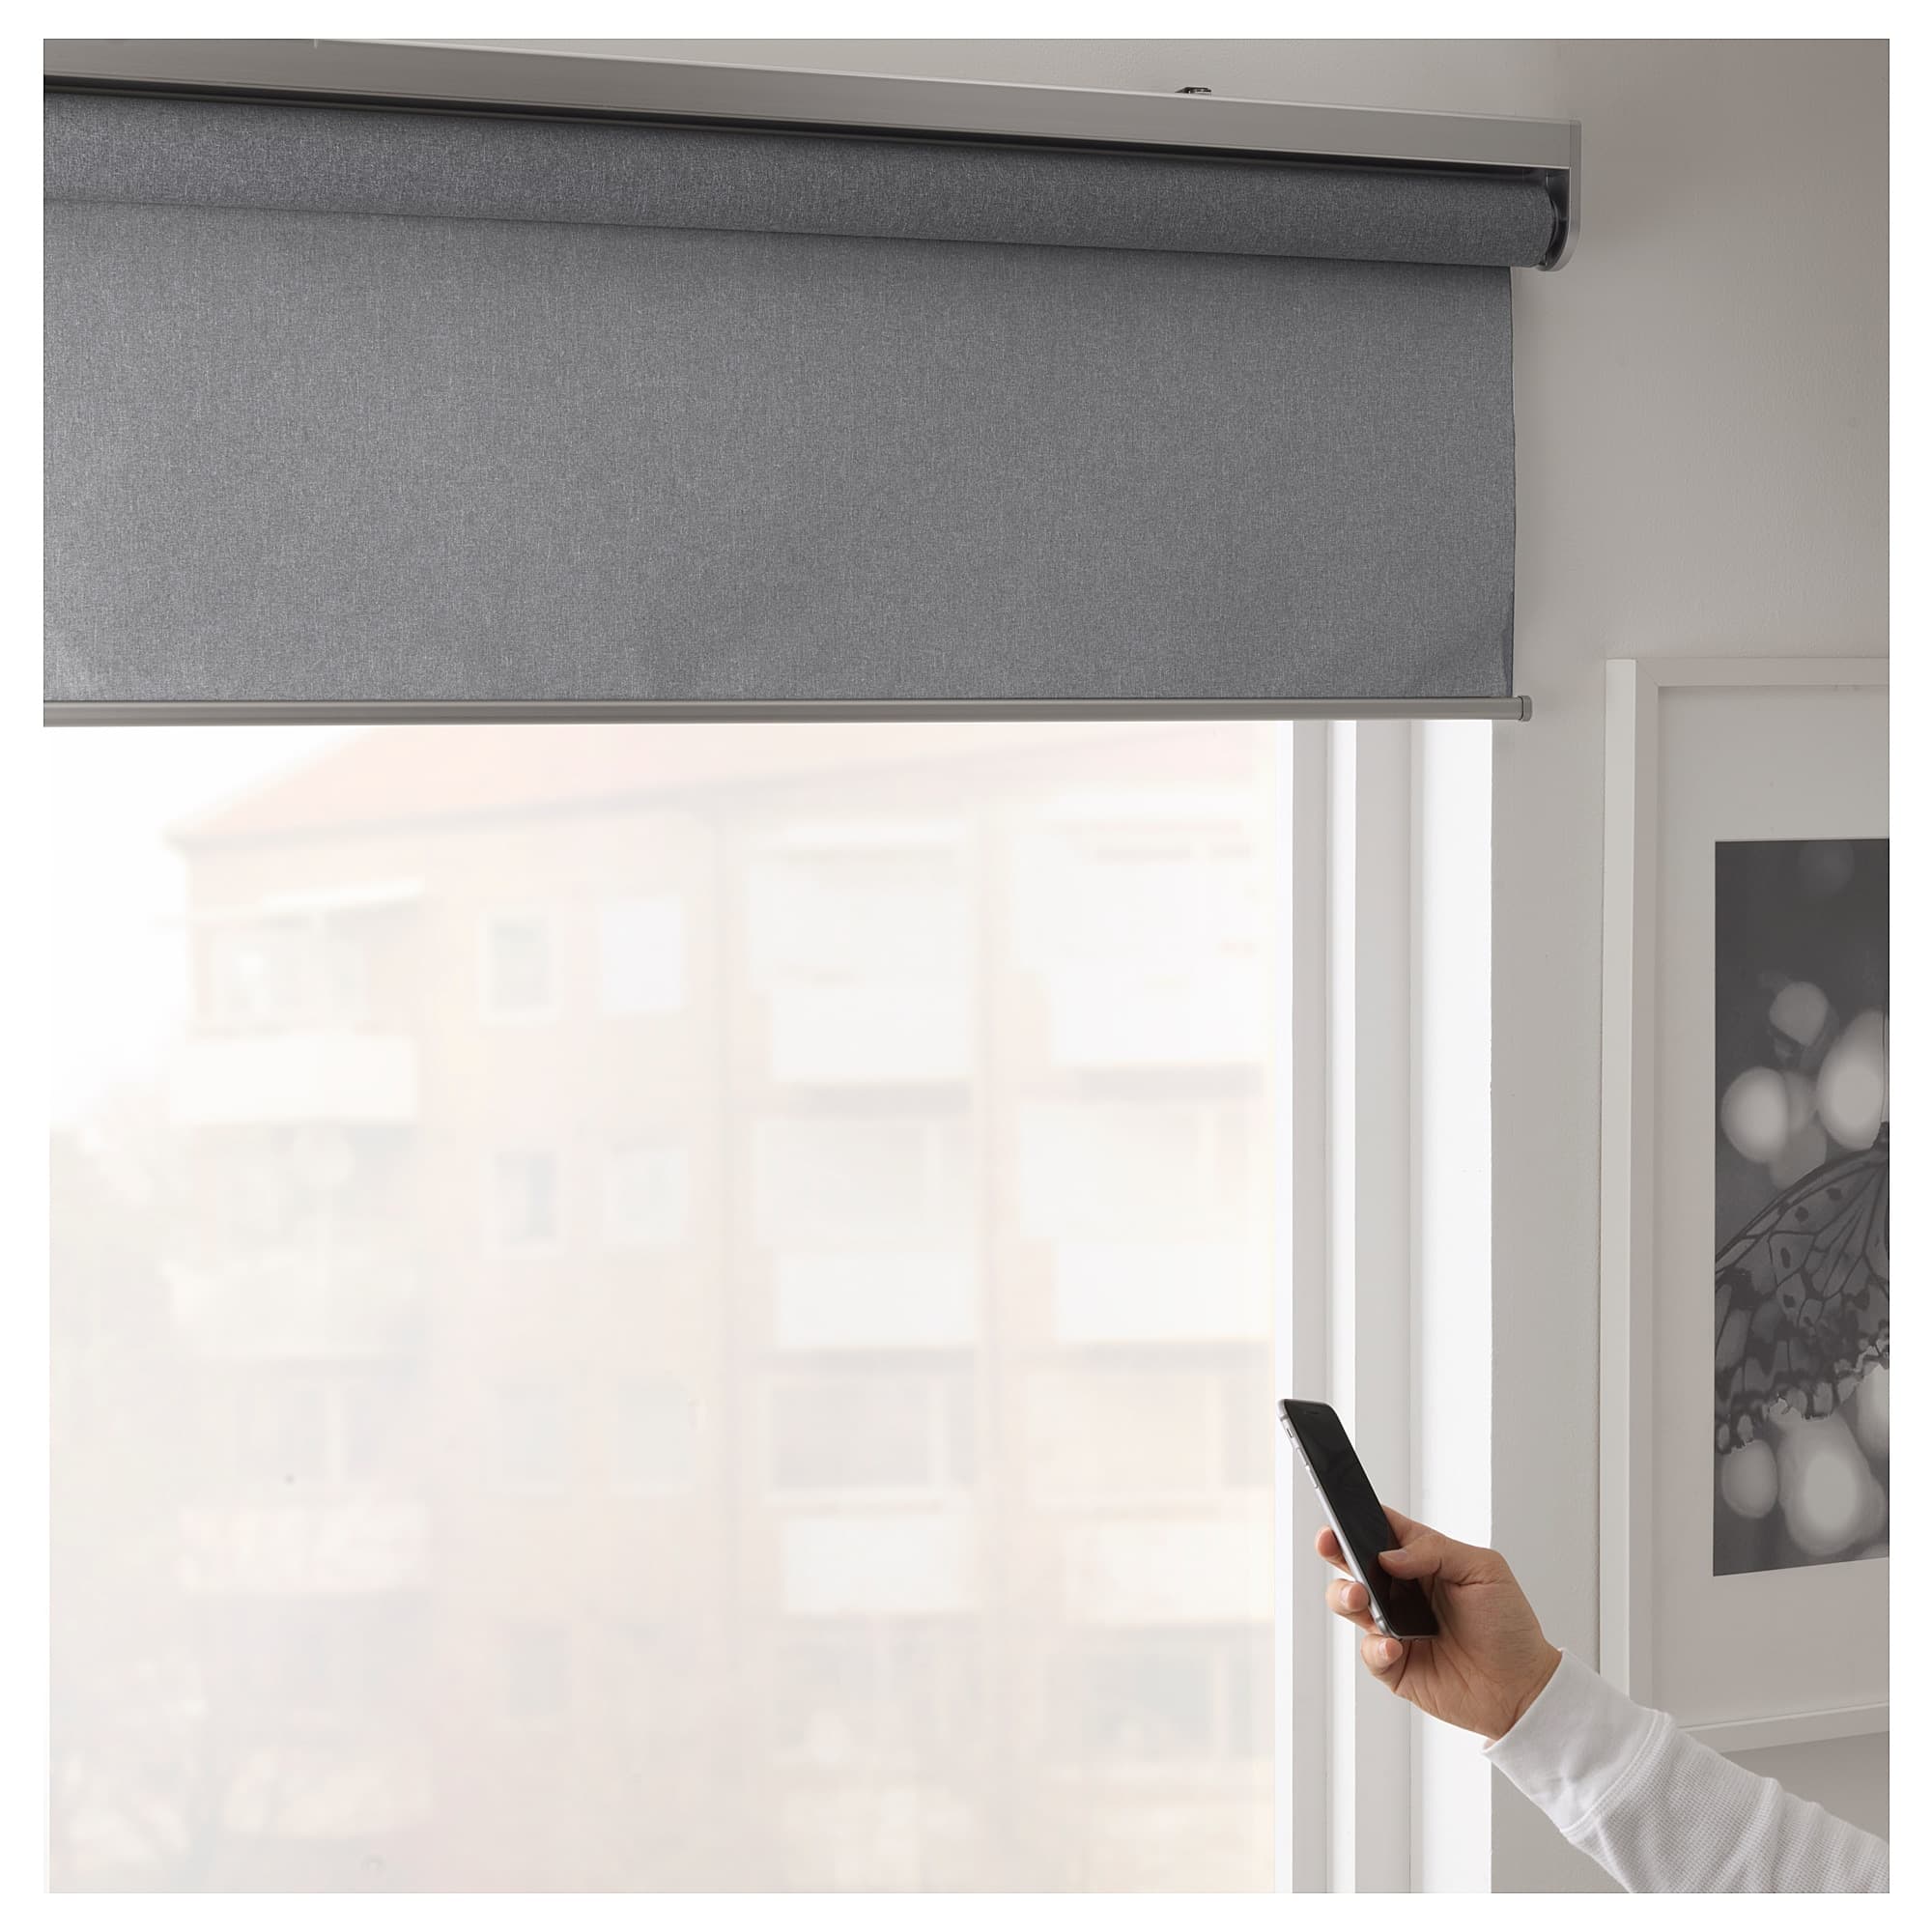 Ikea’s new blinds work with your iPhone via homekit.